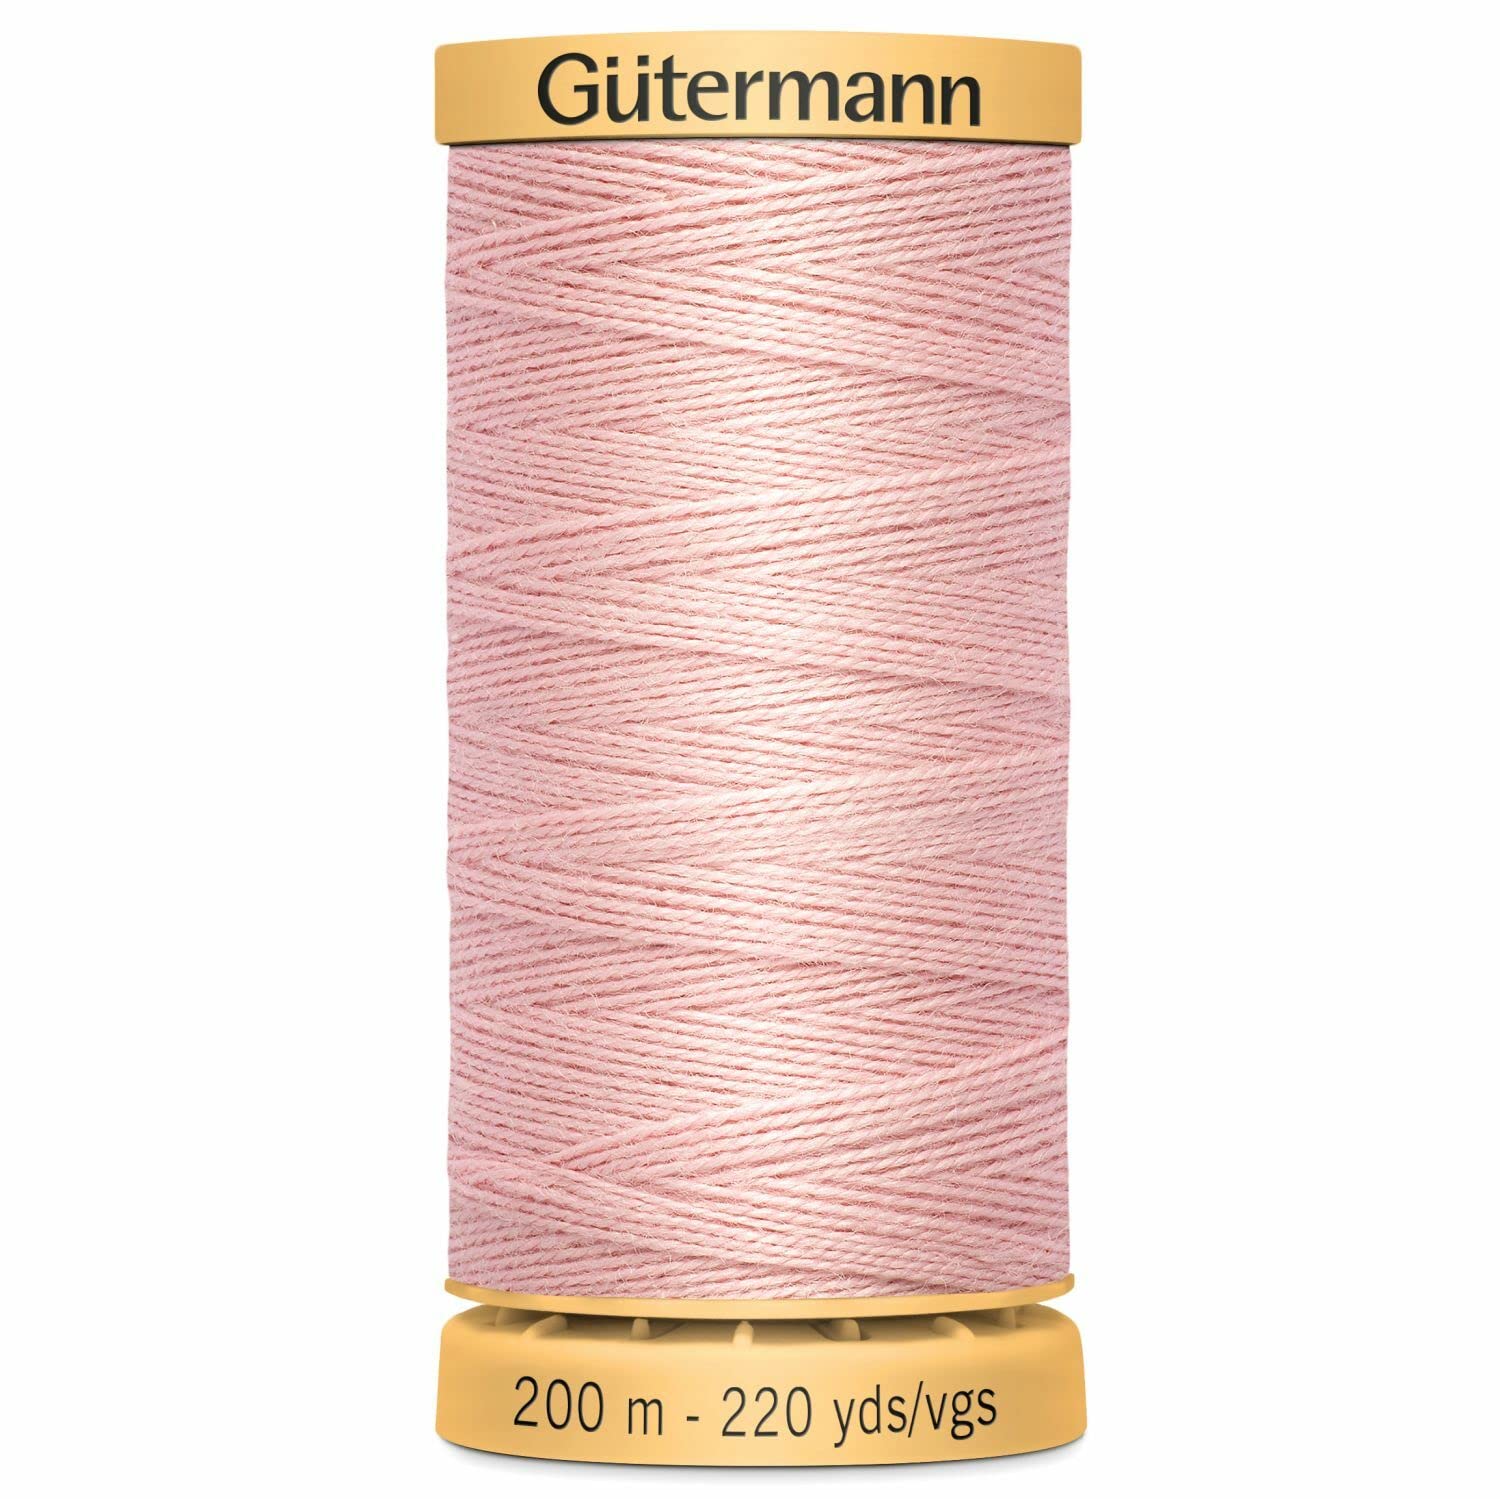 Gutermann Tacking & Basting Weak Sewing Thread 200m 2538 - each